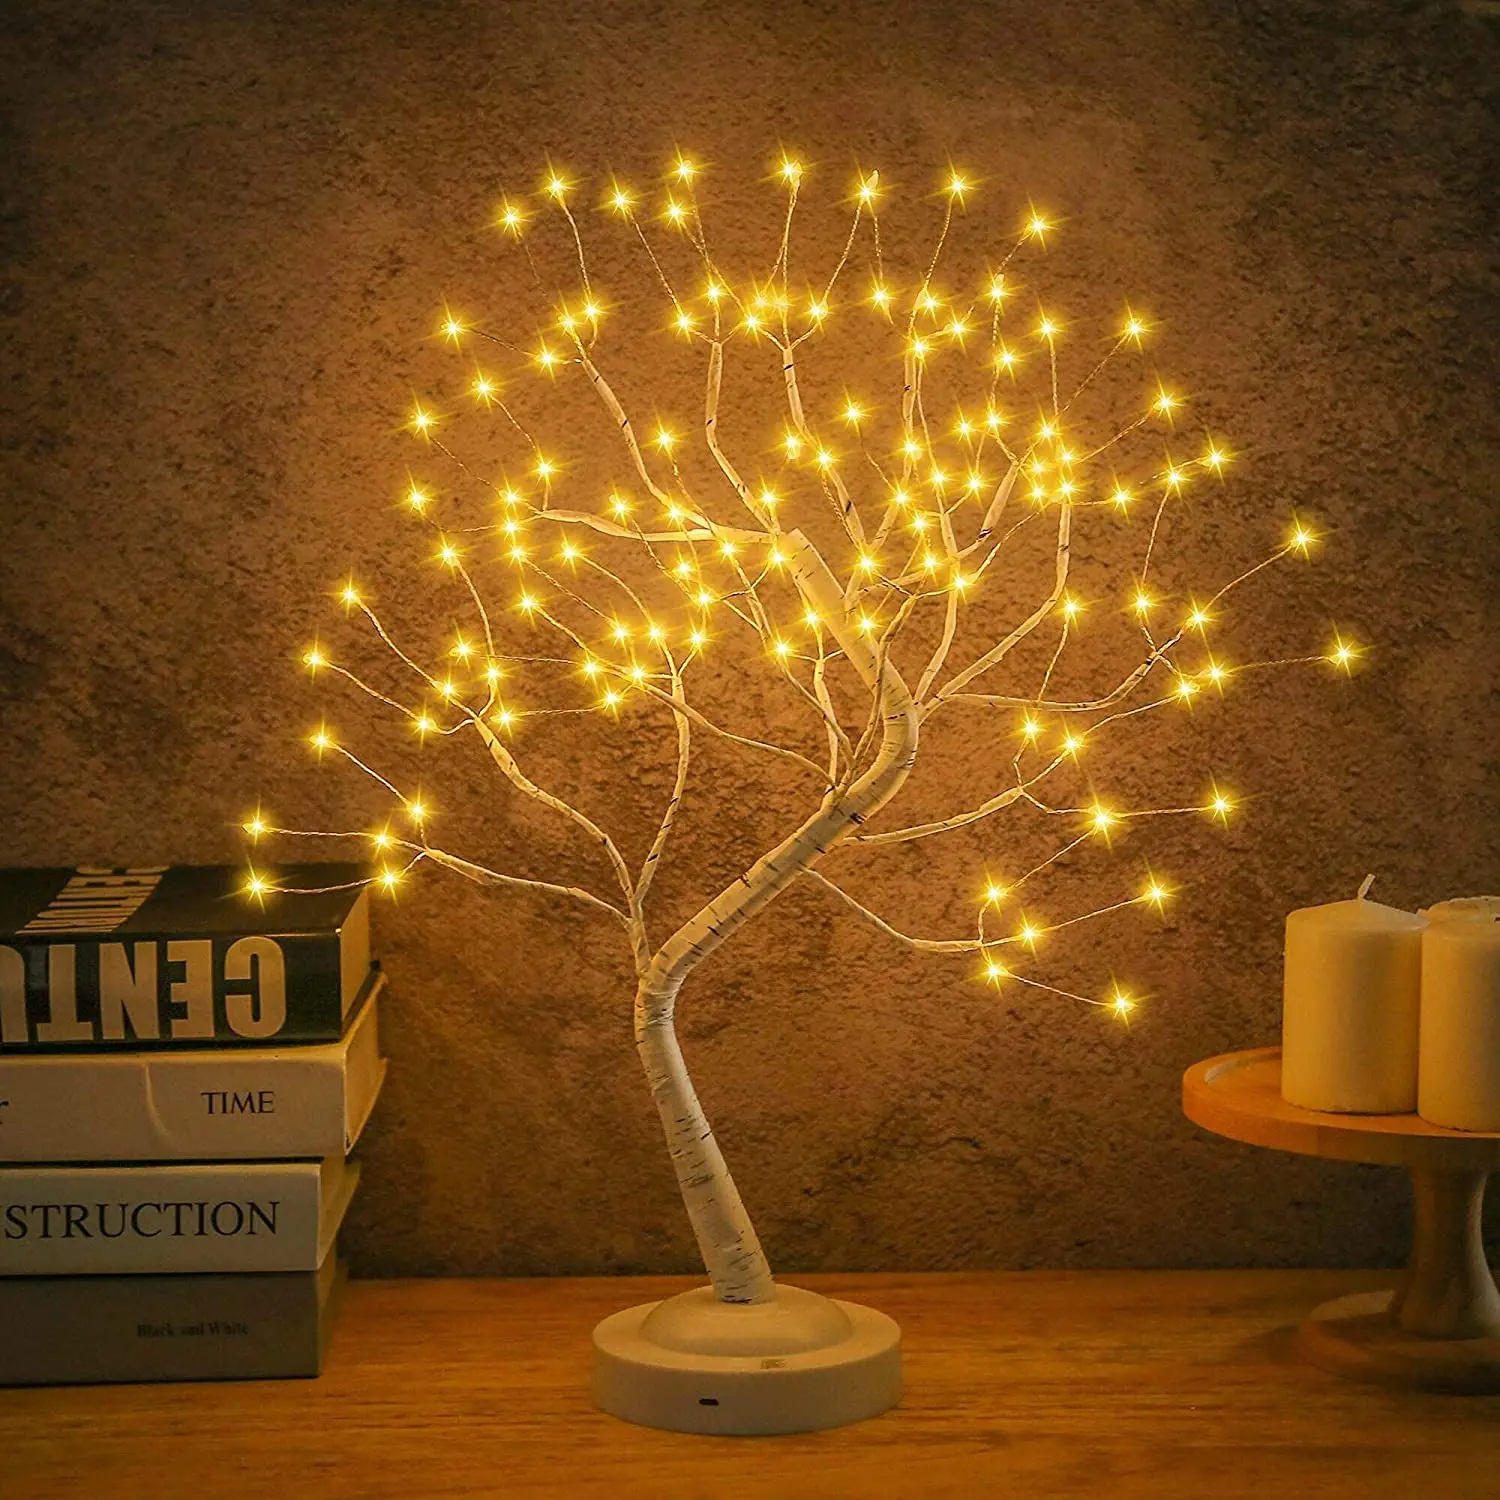 Copper tree LED nightlight details